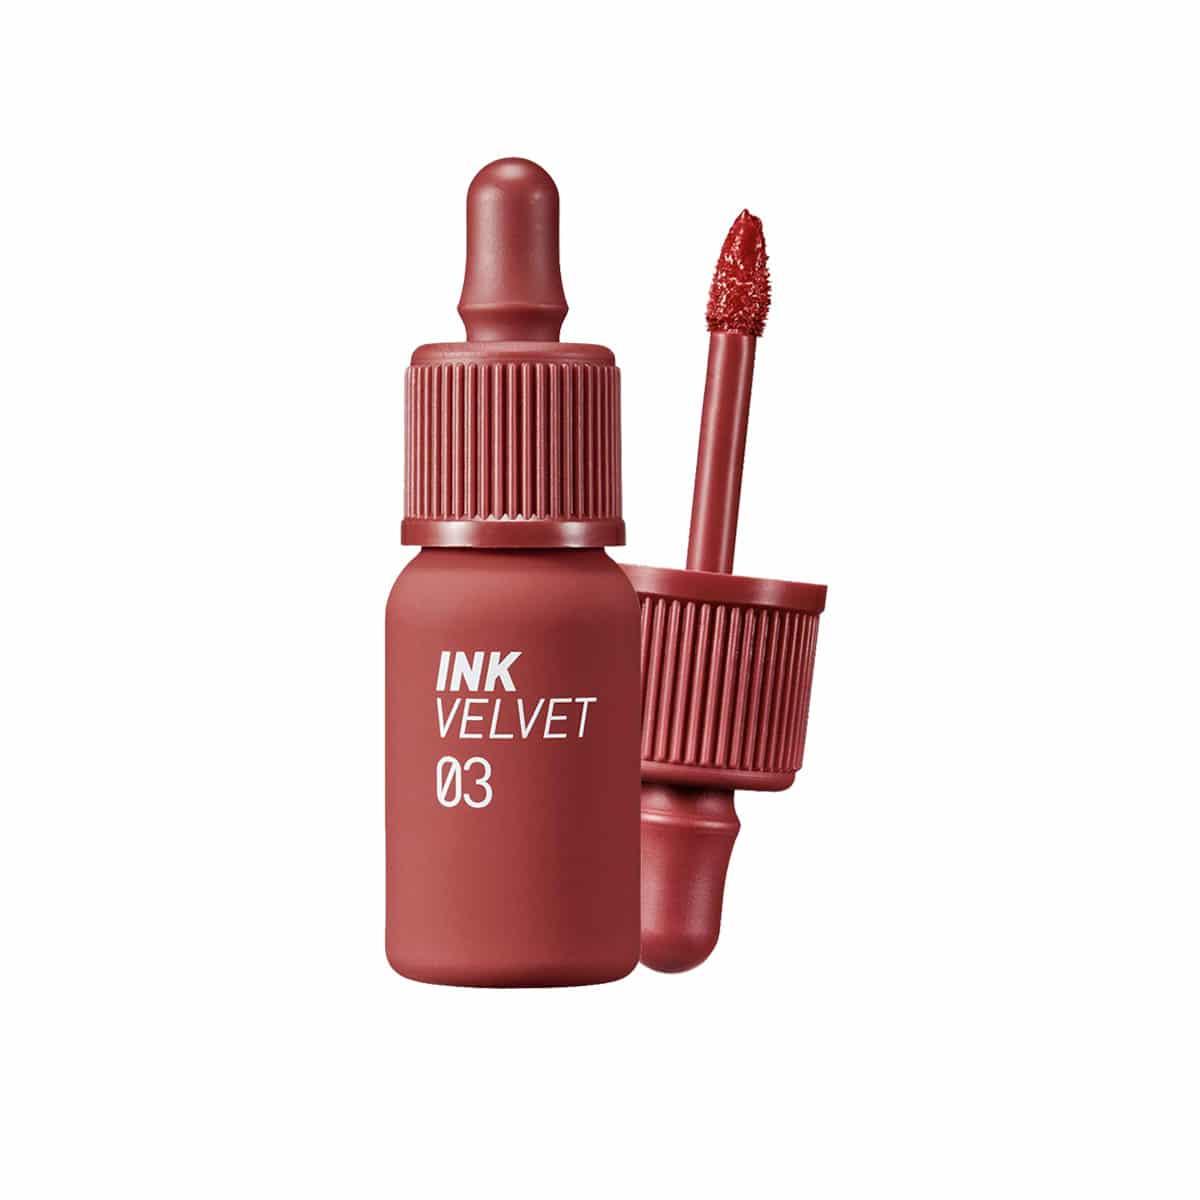 INK VELVET #03 RED ONLY - Arumi Korean Cosmetics